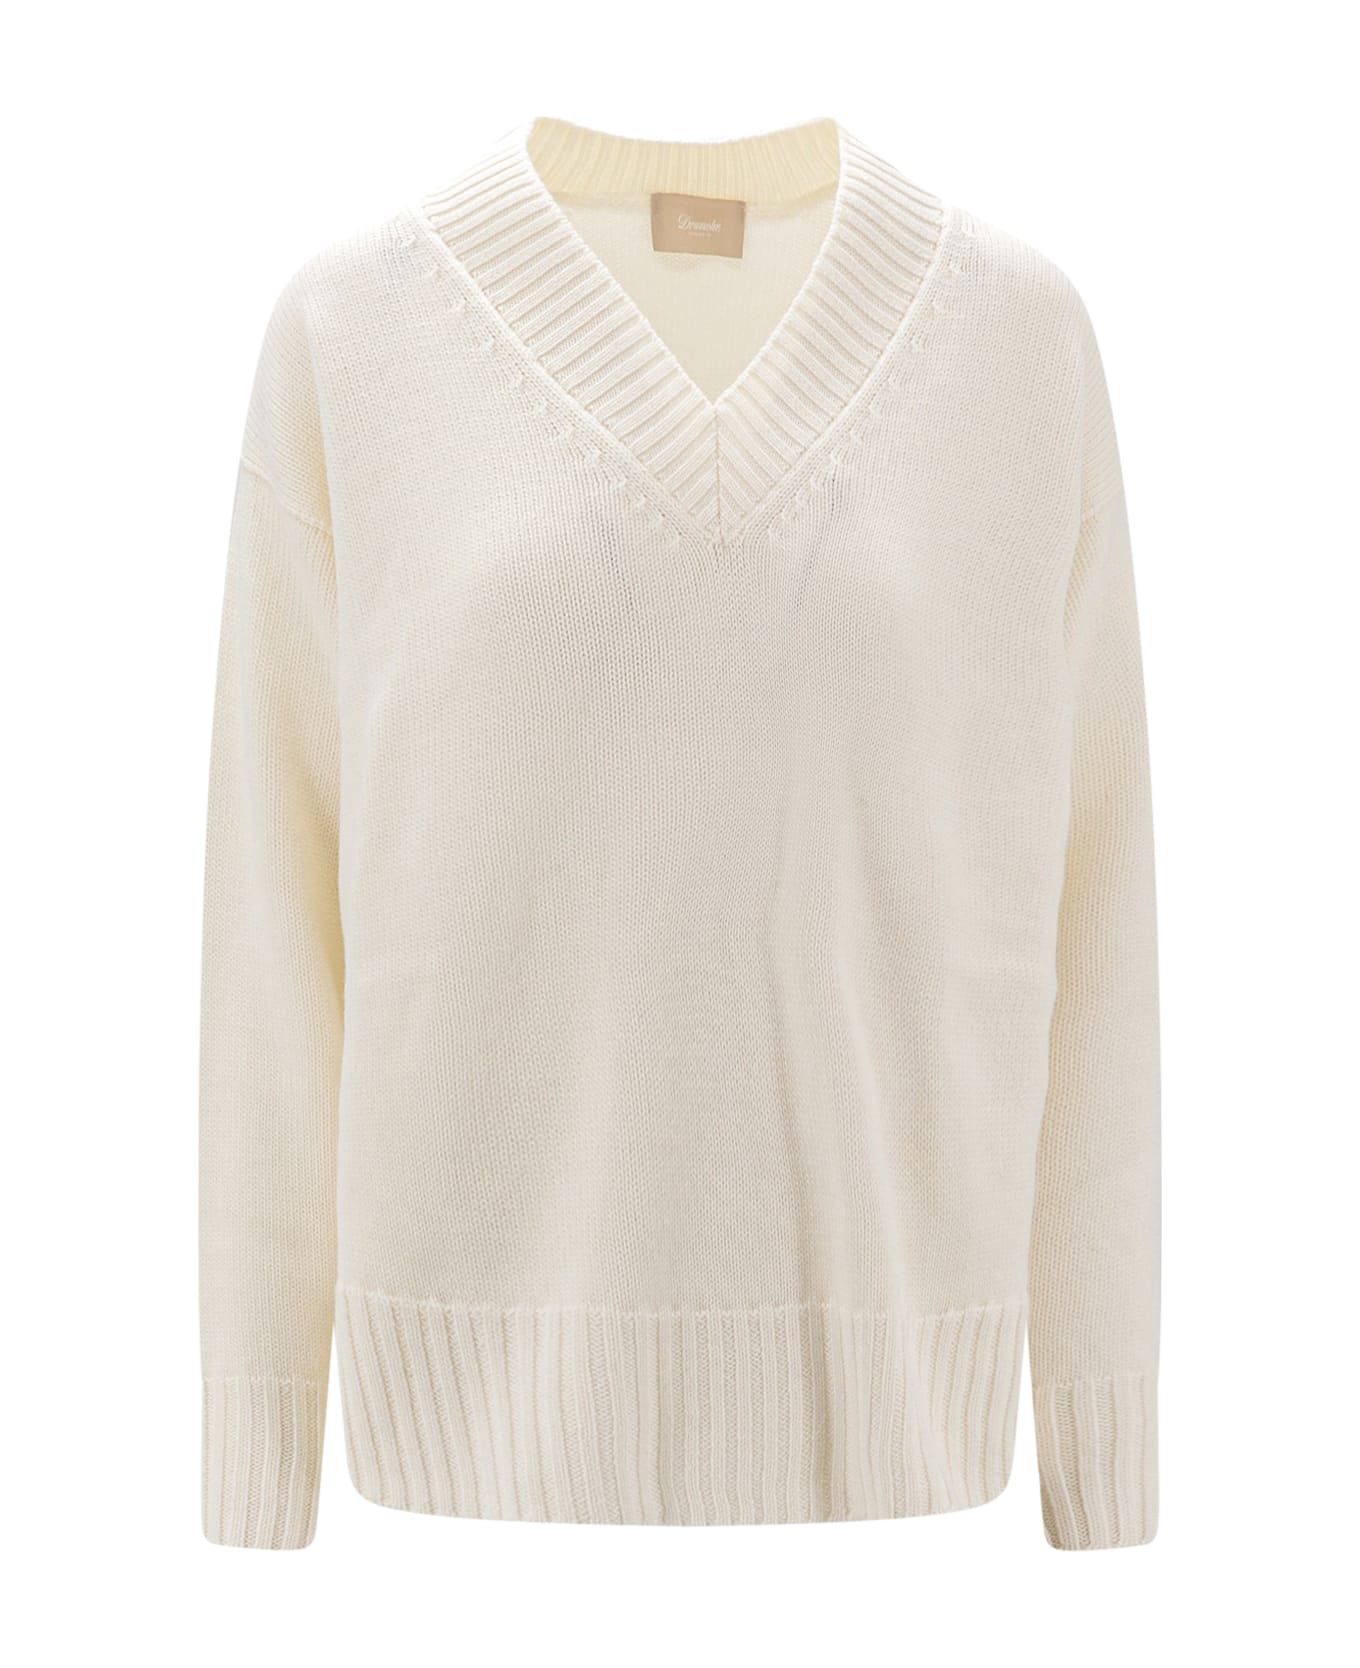 Drumohr Sweater - White ニットウェア